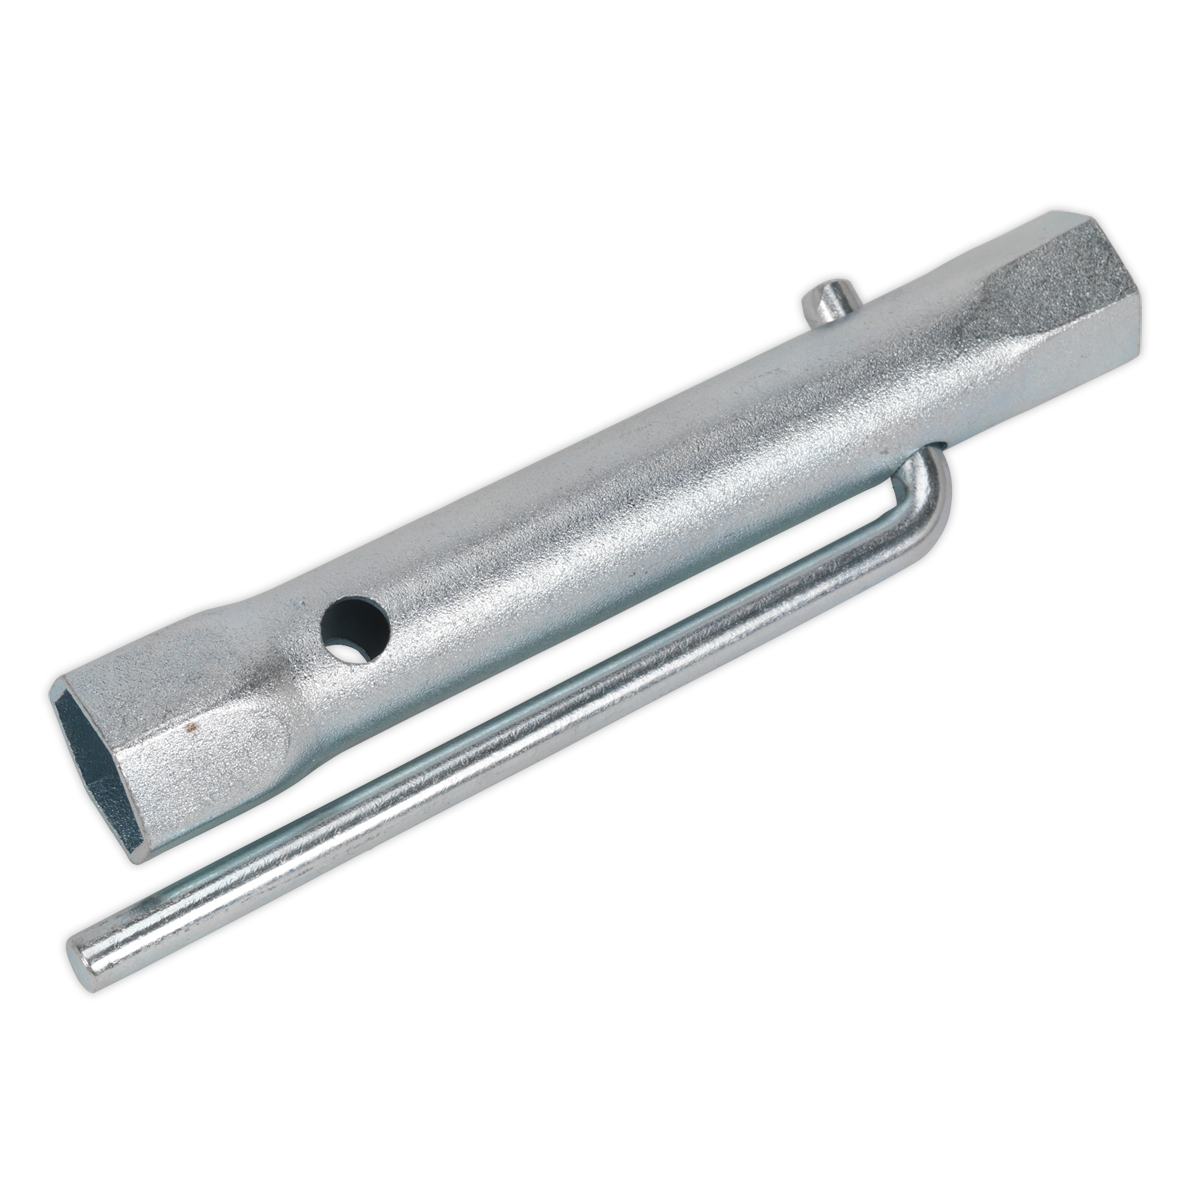 Sealey Double End Long Reach Spark Plug Box Spanner 17/21mm with L-Bar